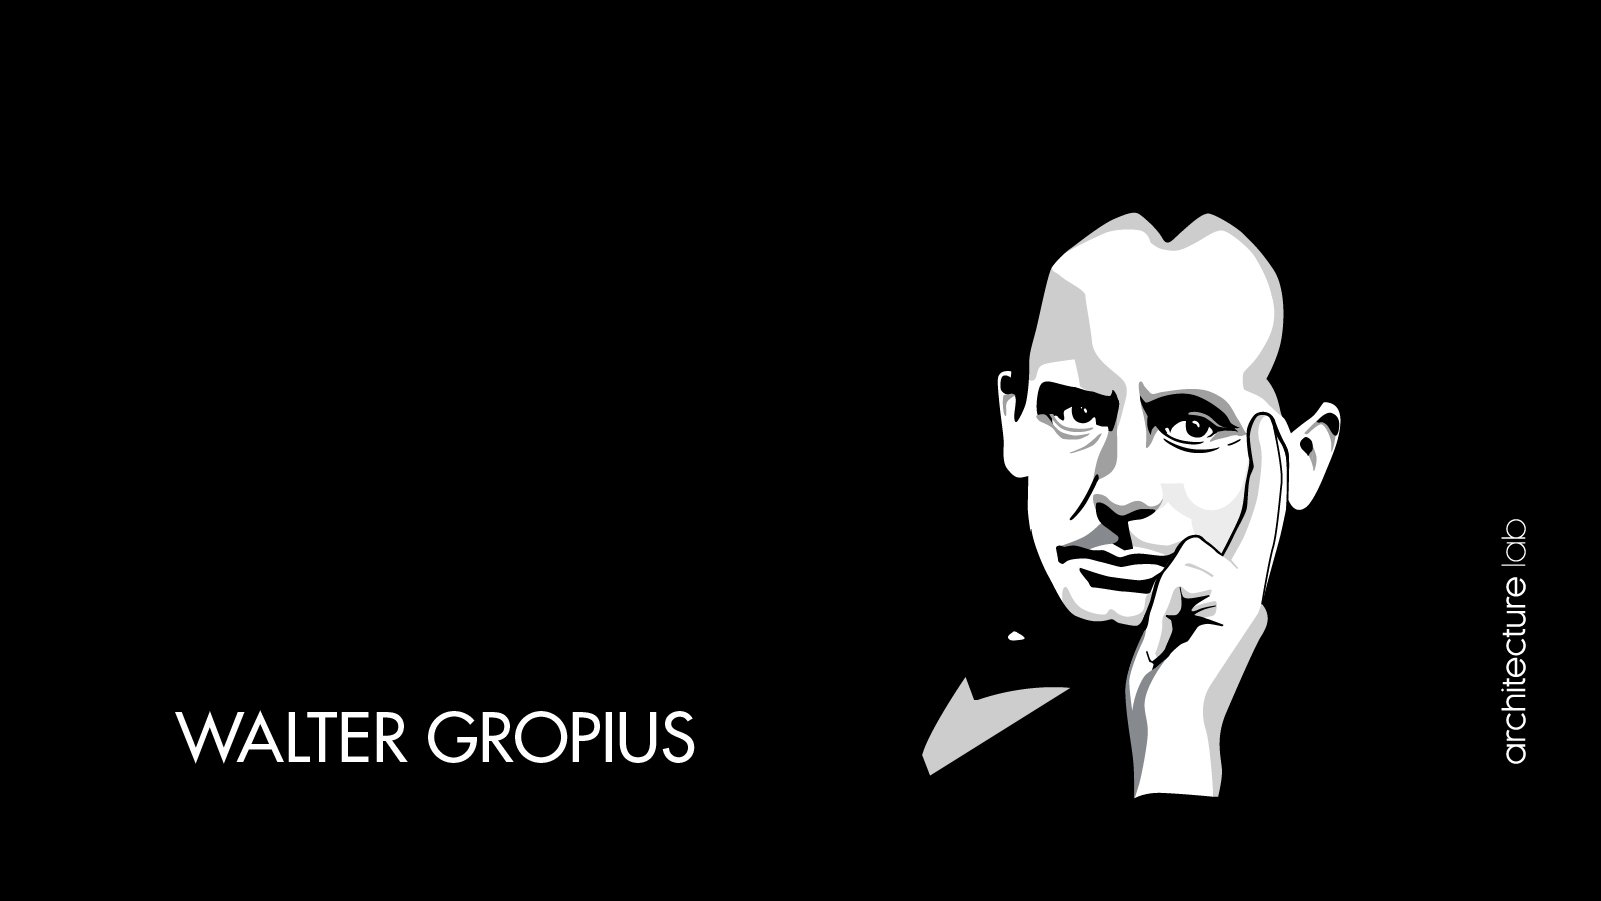 Walter gropius: biography, works, awards